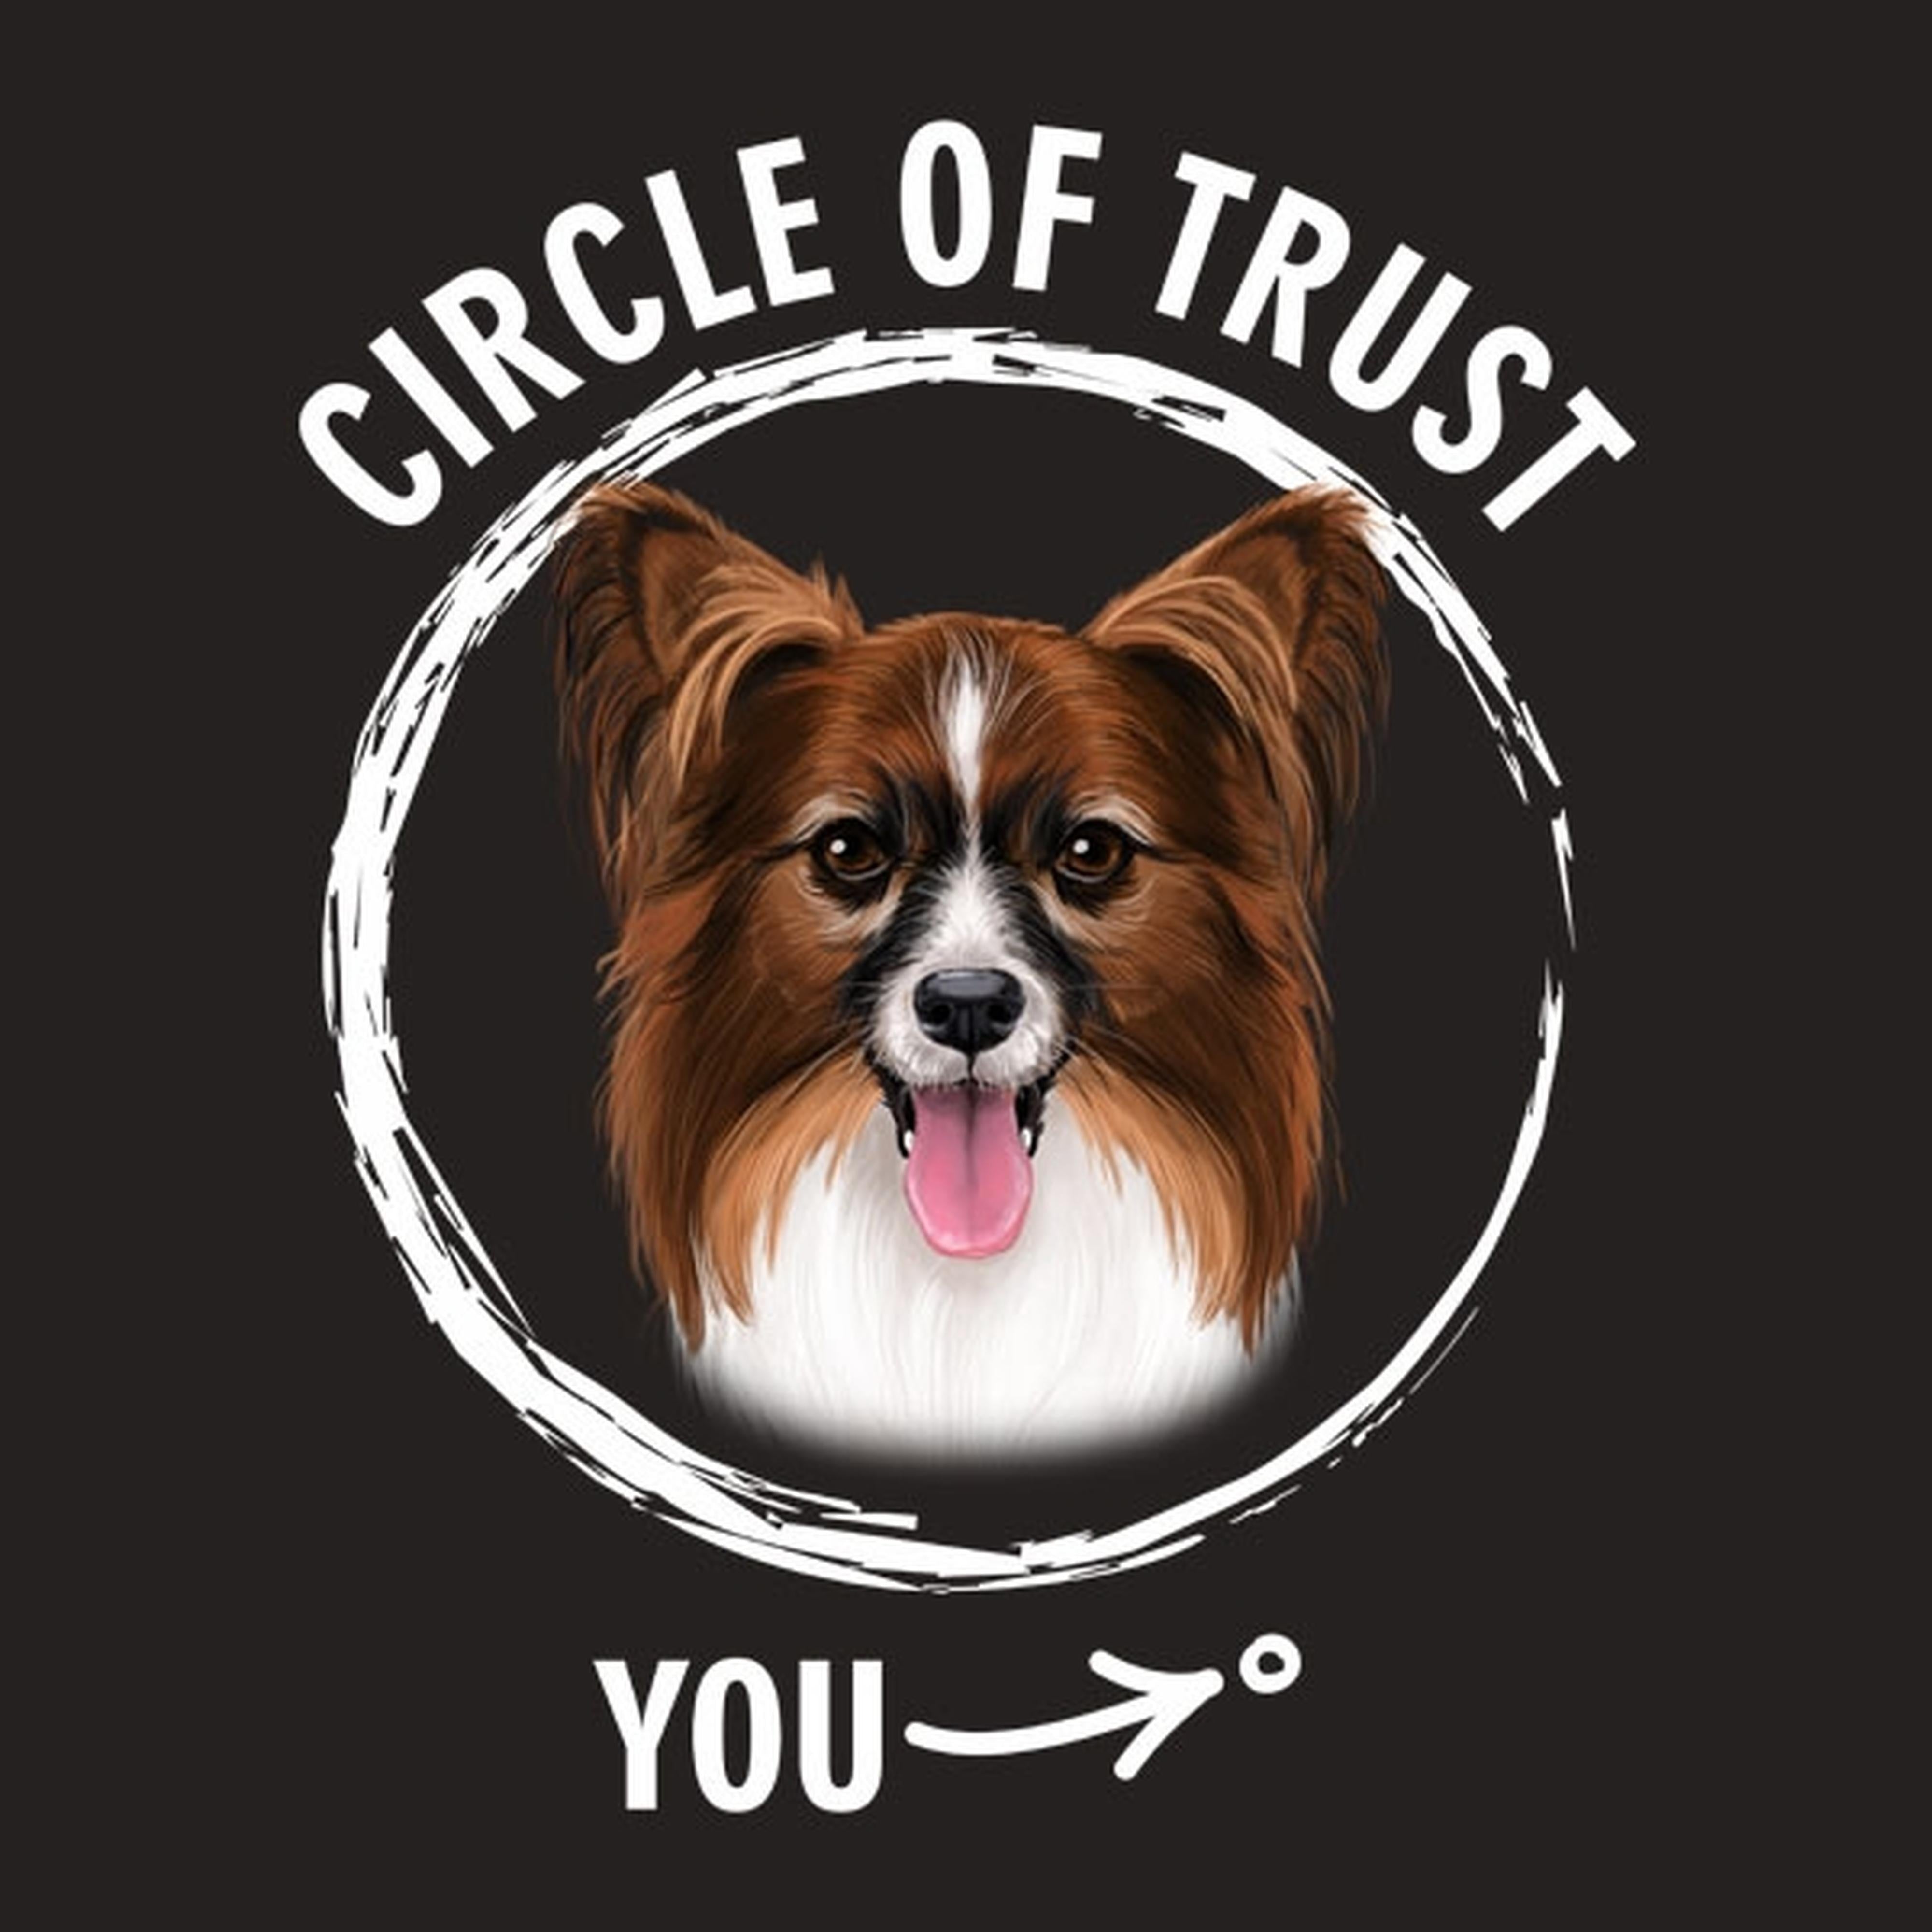 Circle of trust (Papillion) - T-shirt